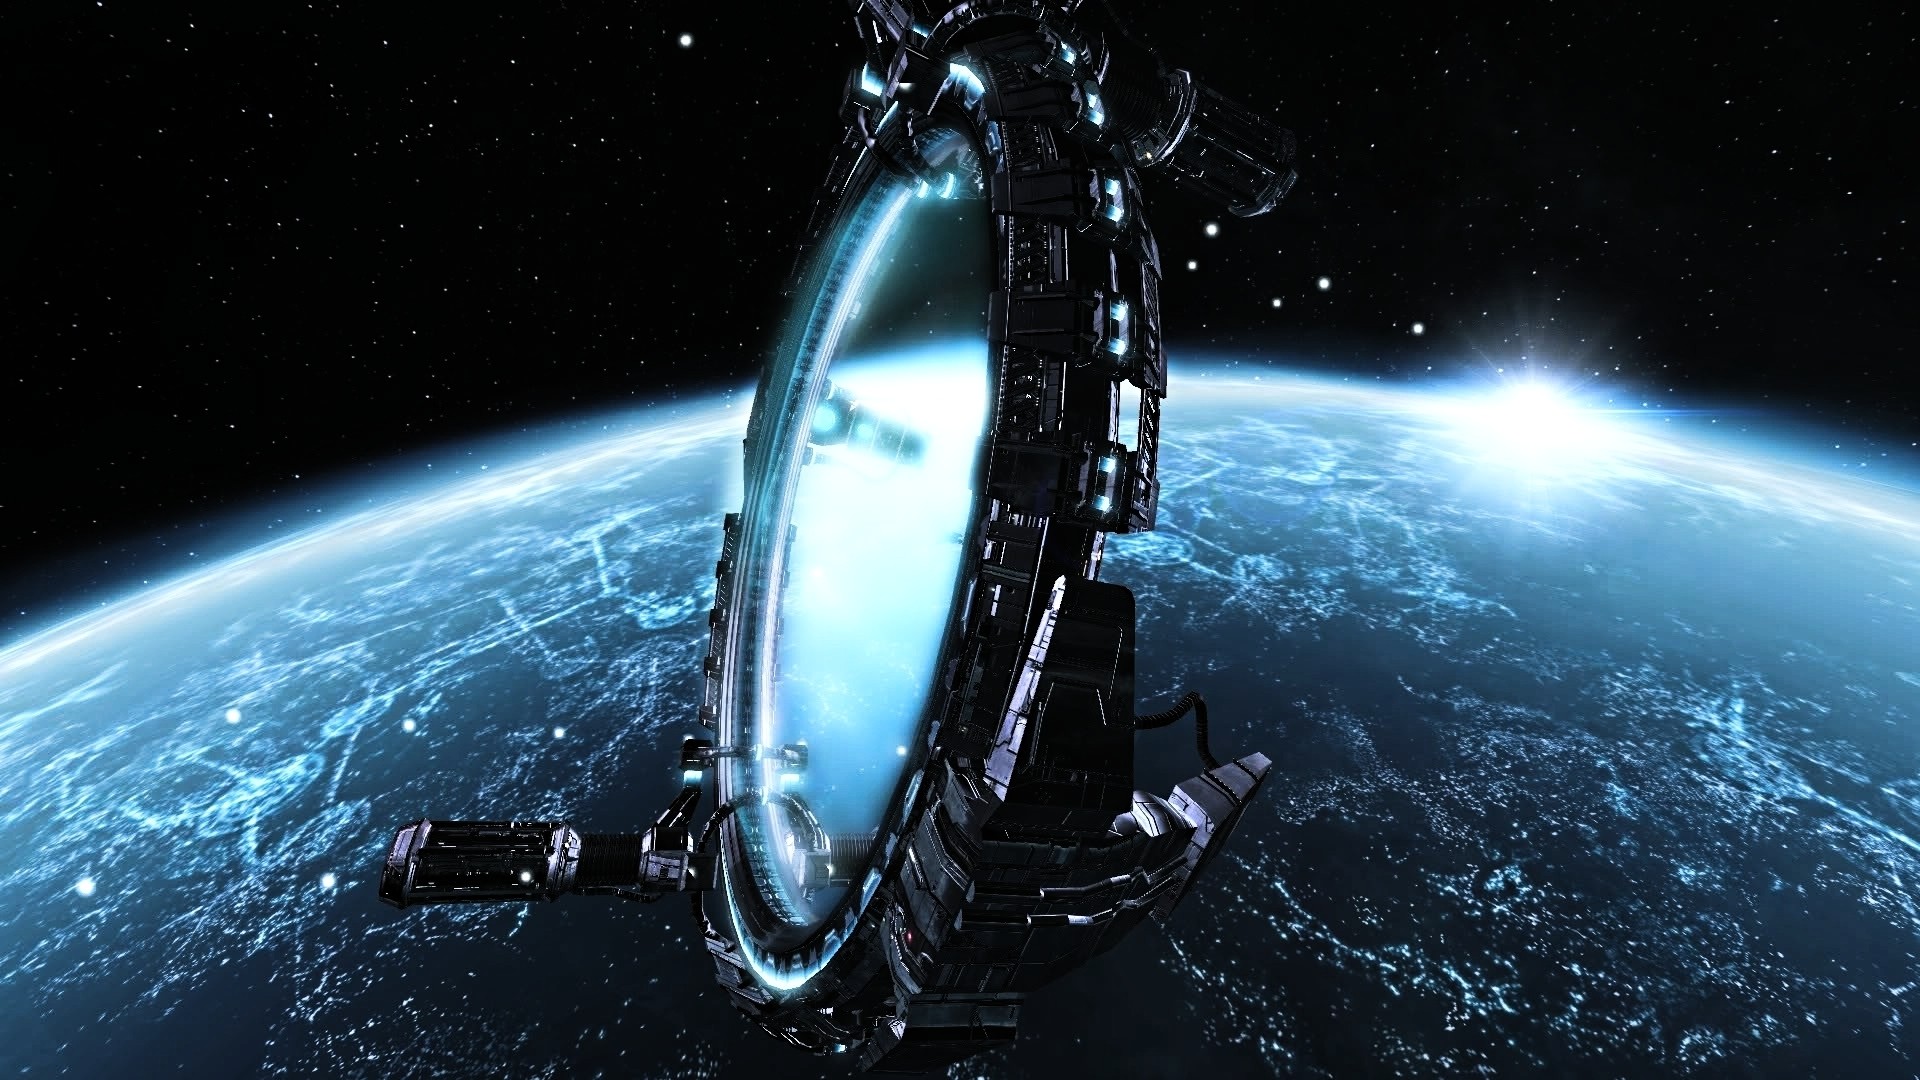 Interstellar Space Station Movie Pics About